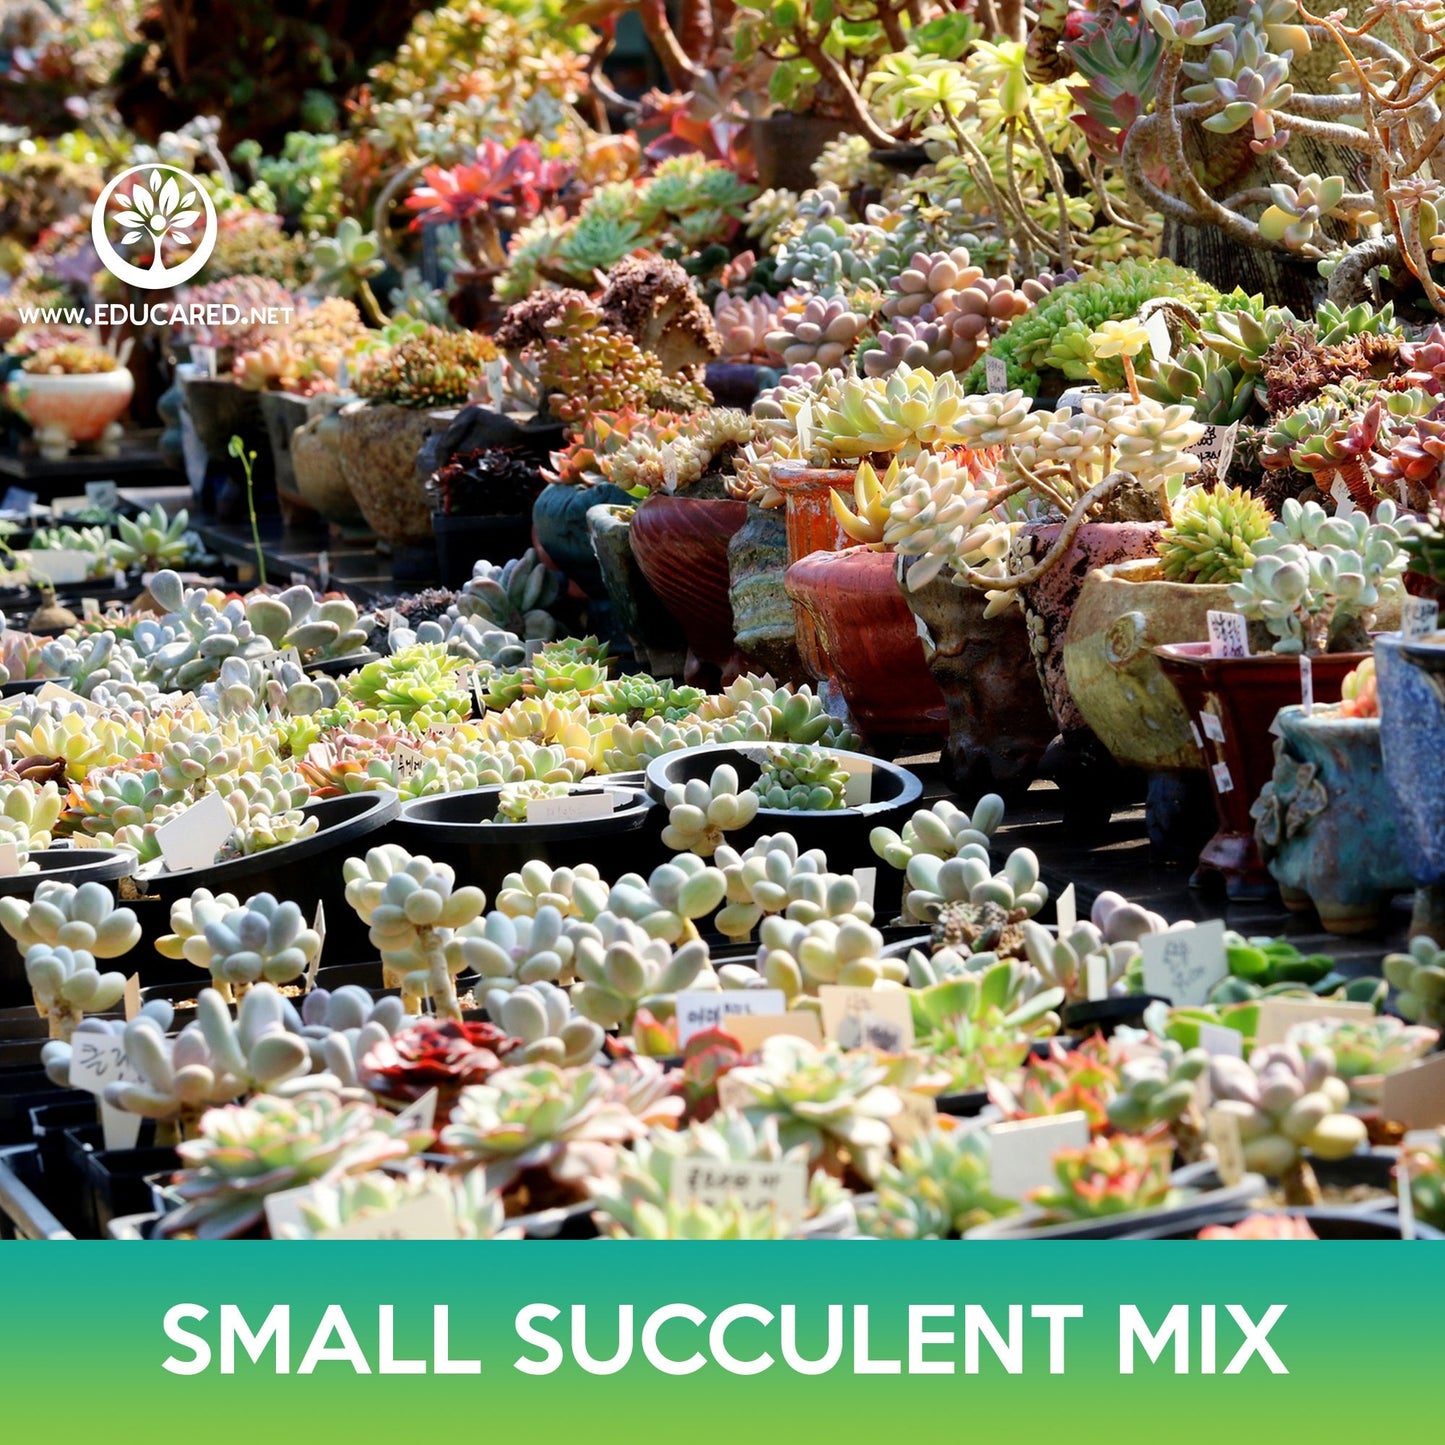 Small Succulent Mix Seeds